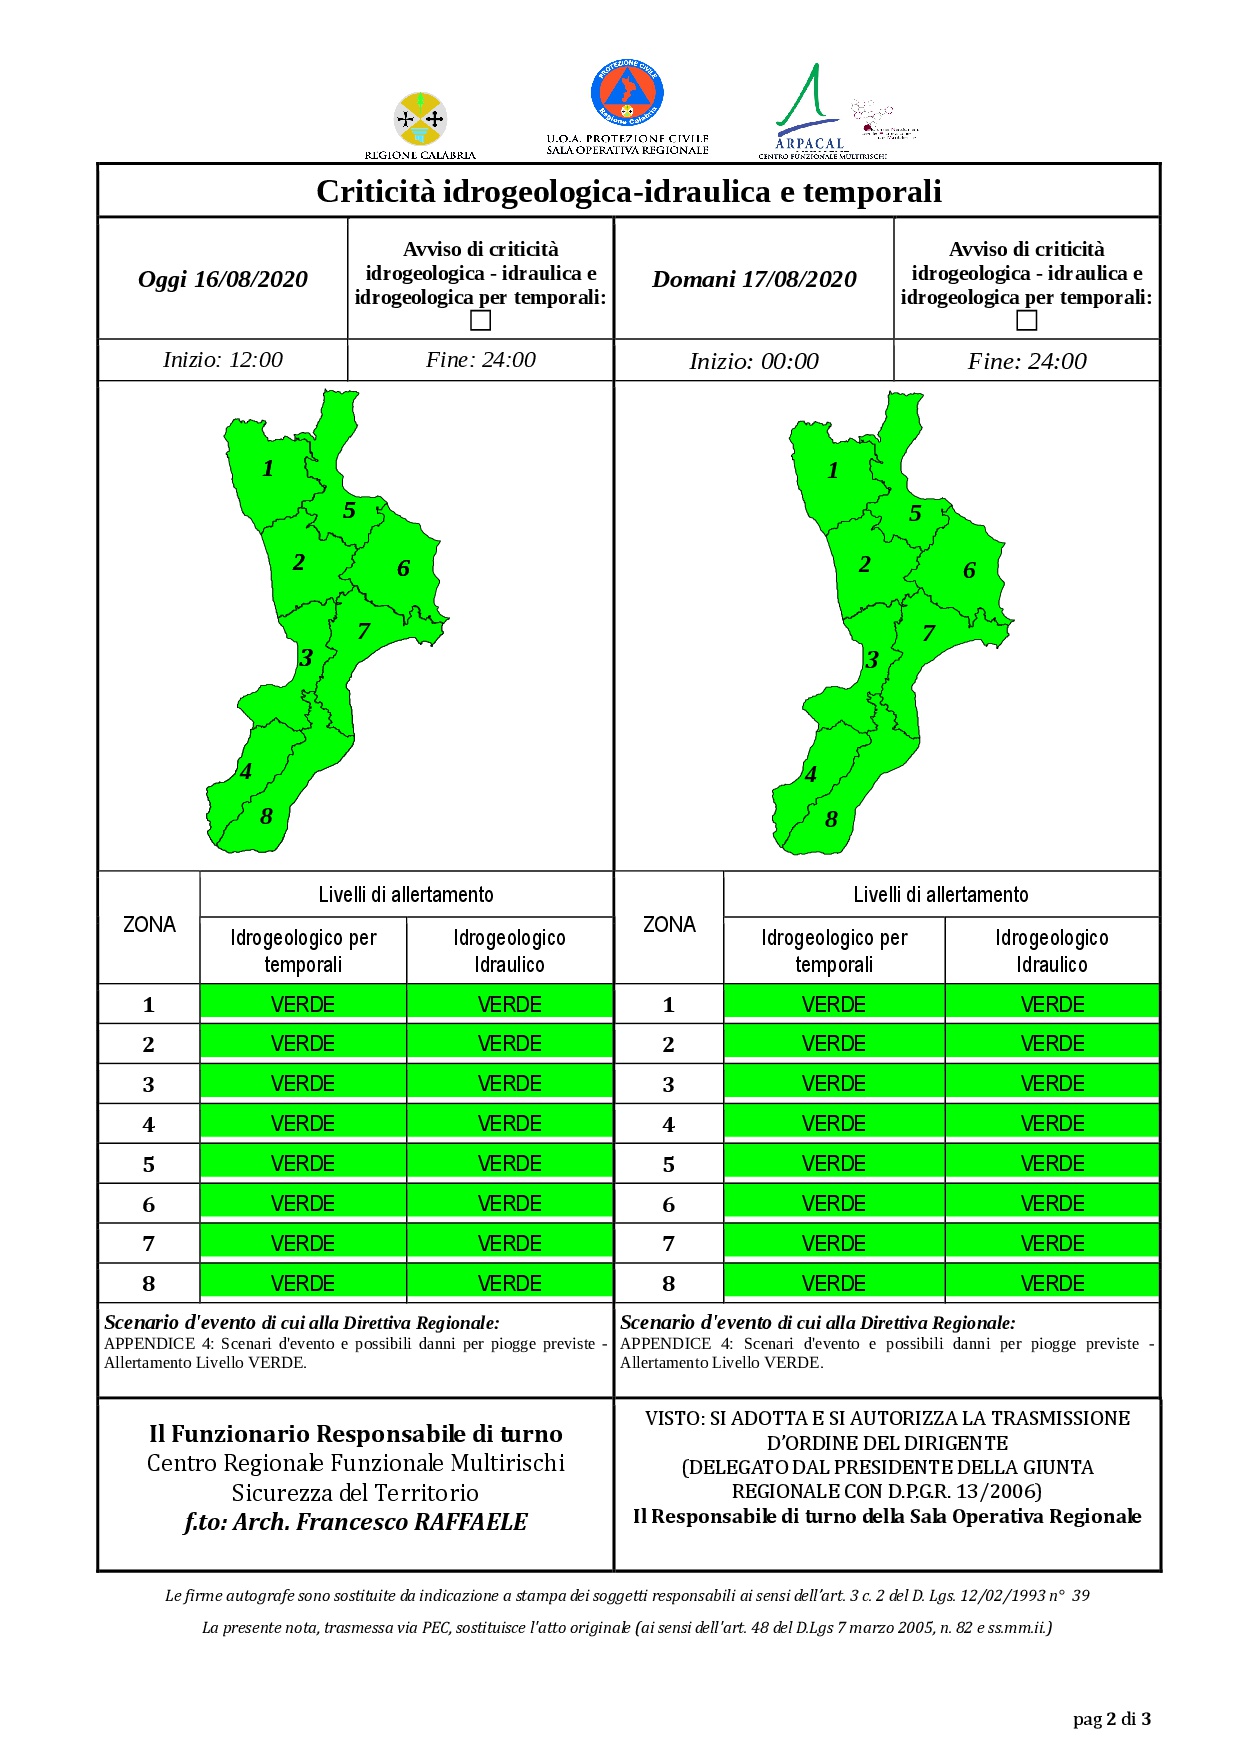 Criticità idrogeologica-idraulica e temporali in Calabria 16-08-2020